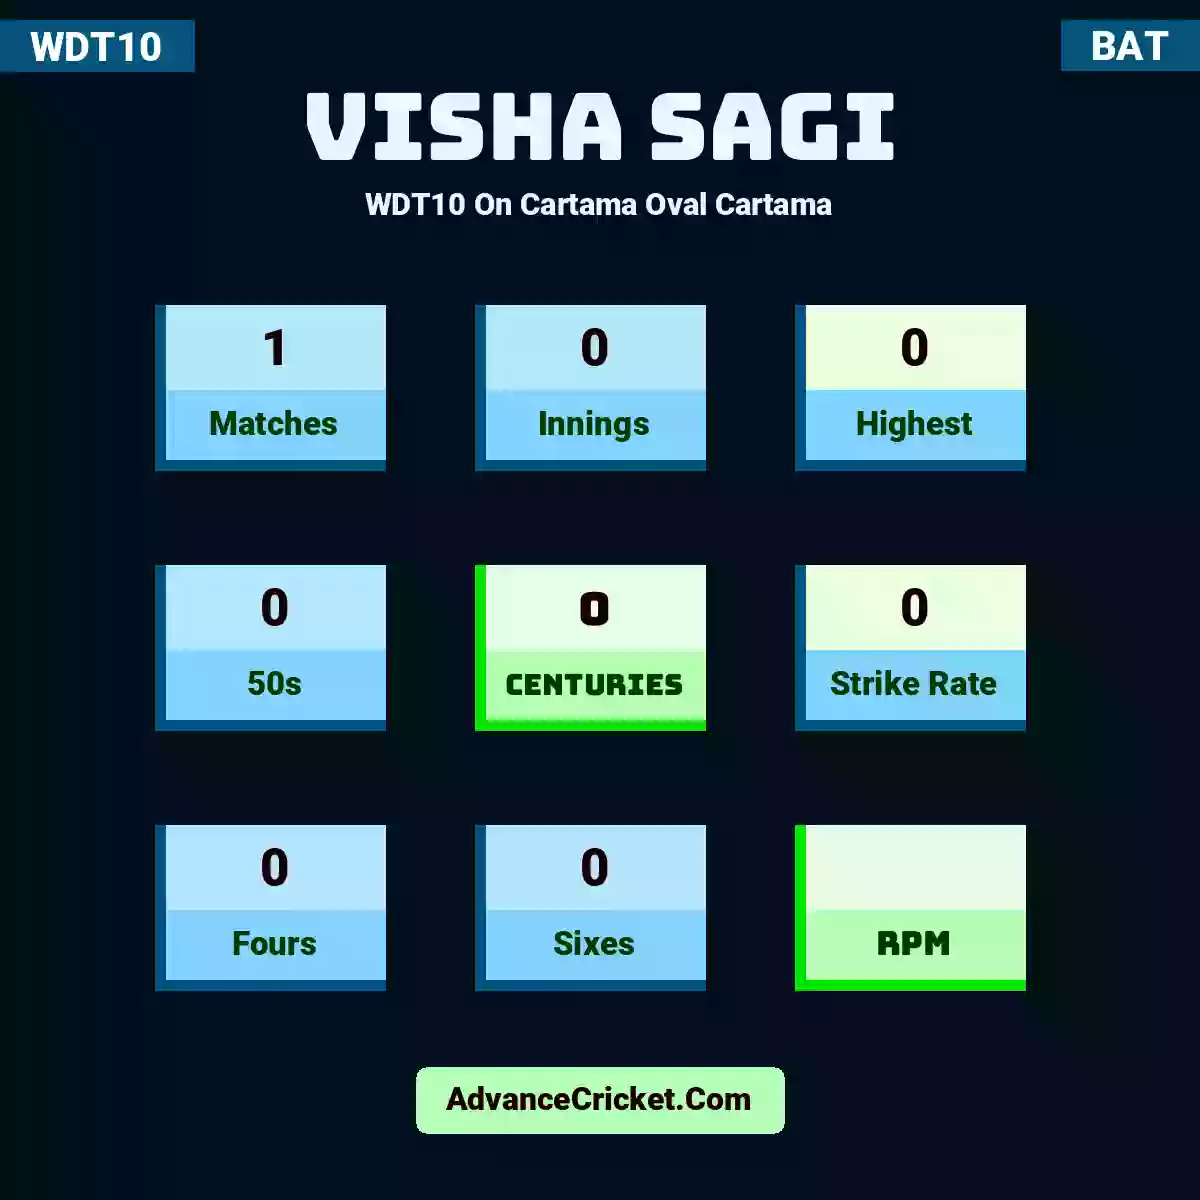 Visha Sagi WDT10  On Cartama Oval Cartama, Visha Sagi played 1 matches, scored 0 runs as highest, 0 half-centuries, and 0 centuries, with a strike rate of 0. V.Sagi hit 0 fours and 0 sixes.